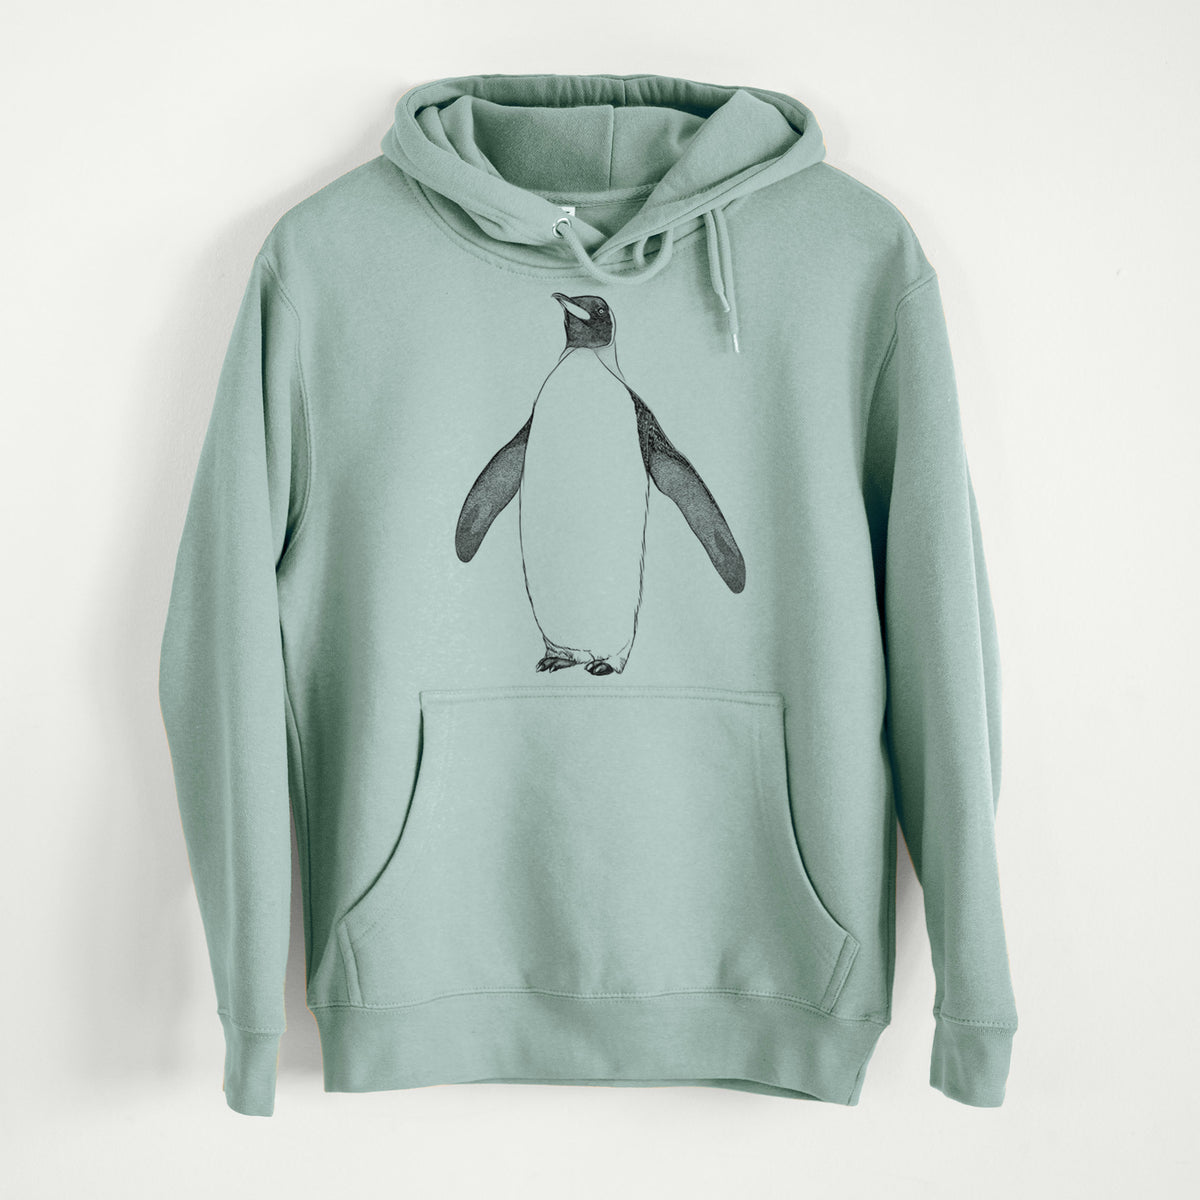 Emperor Penguin - Aptenodytes forsteri  - Mid-Weight Unisex Premium Blend Hoodie